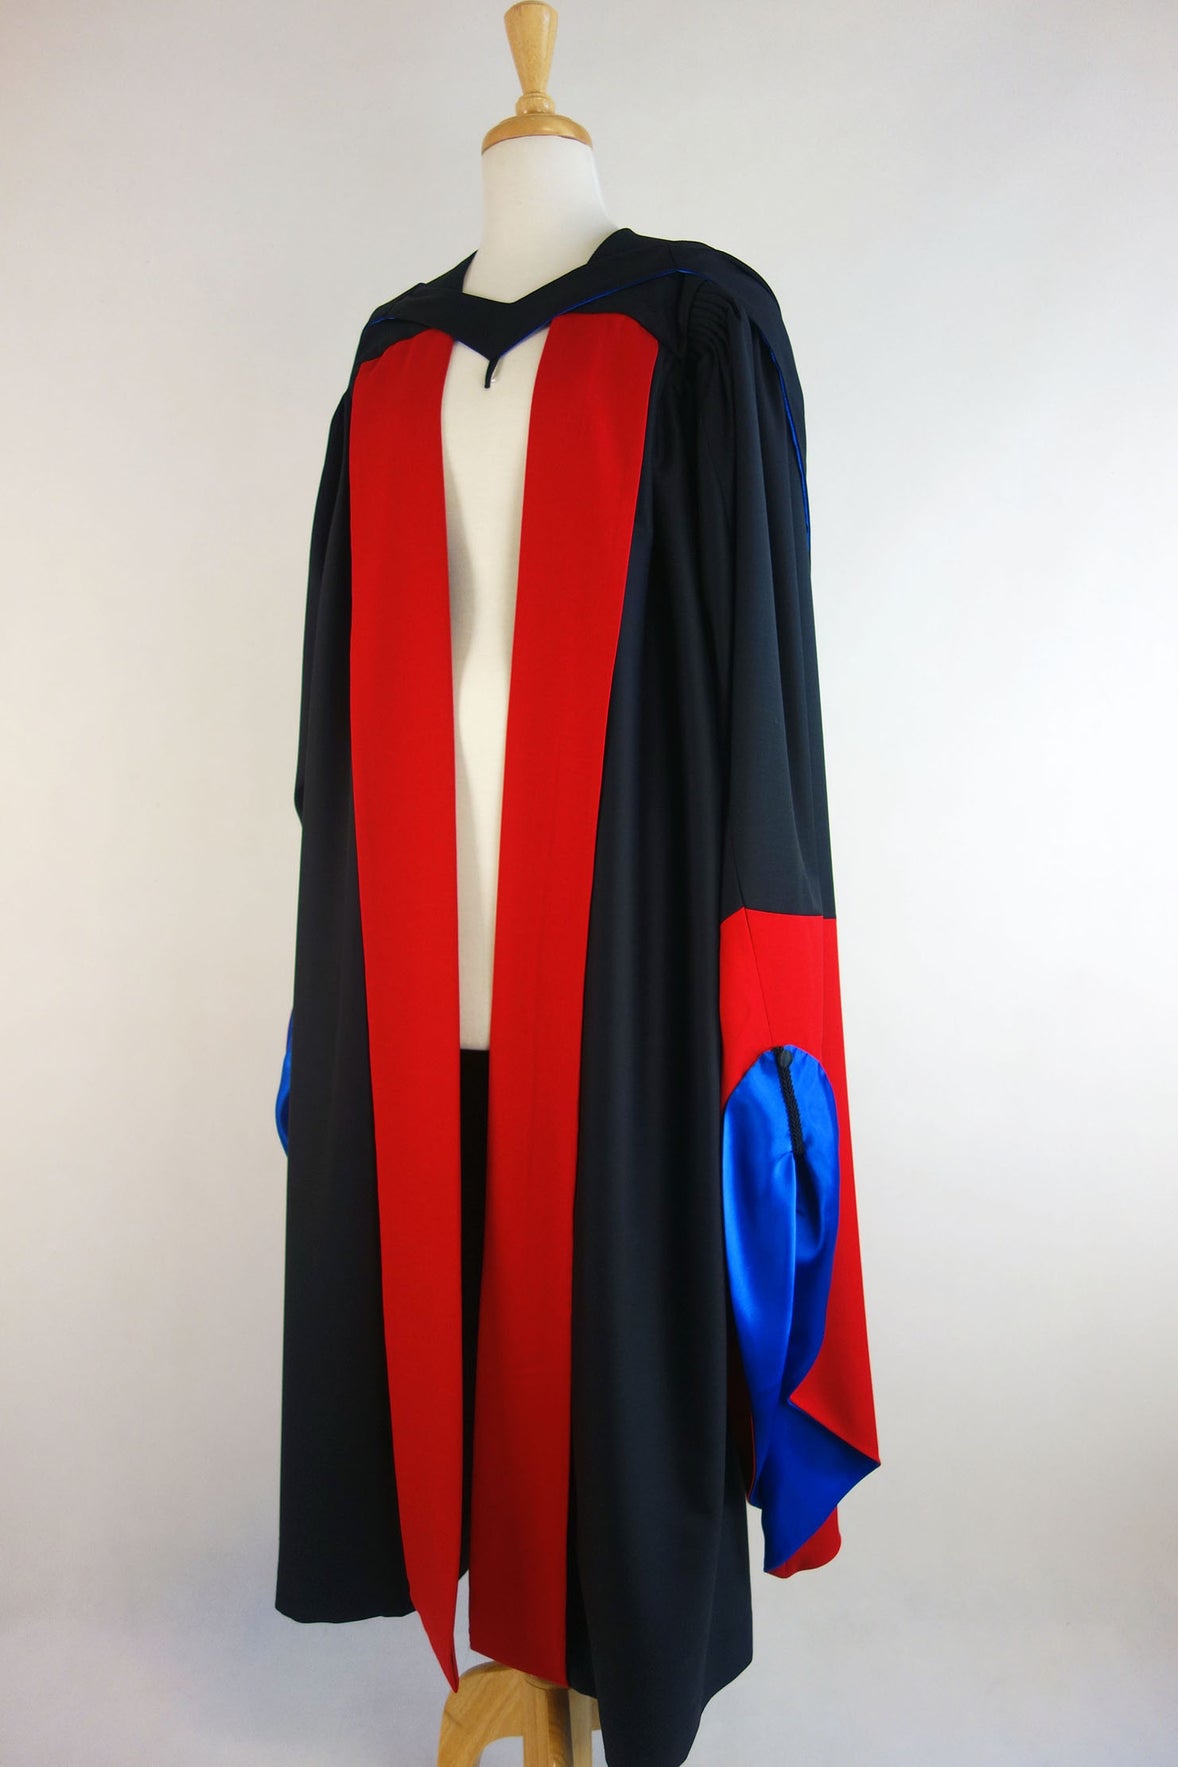 uk phd graduation gown